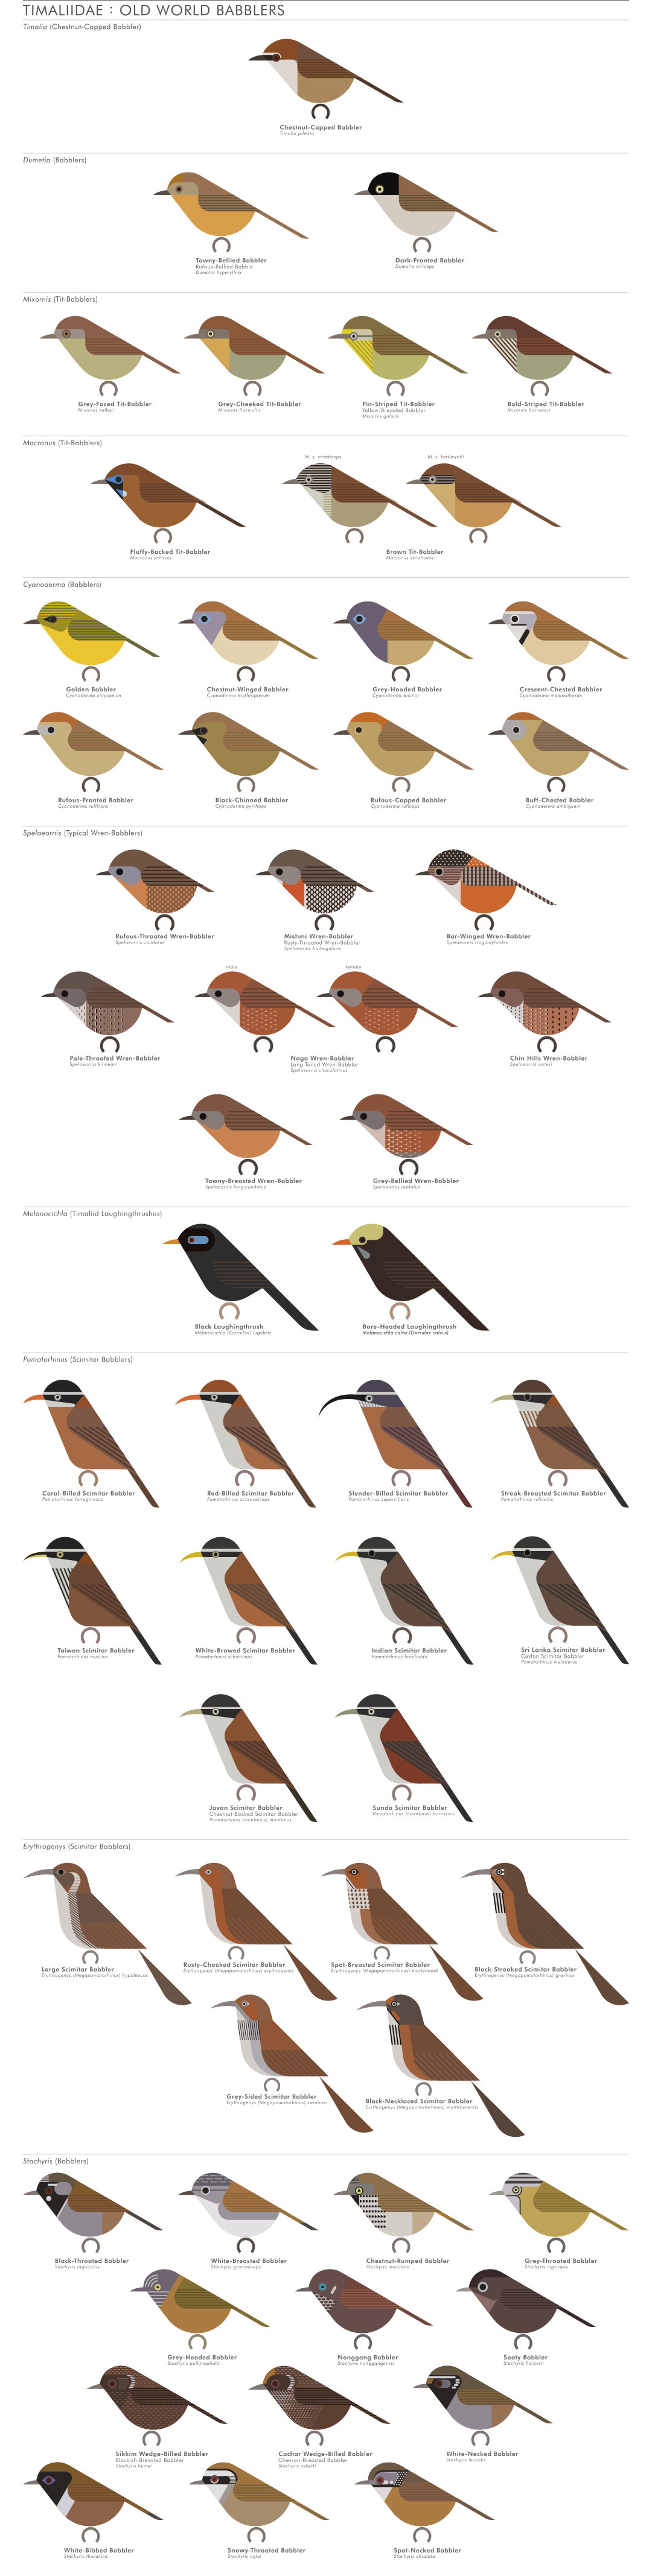 scott partridge - AVE - avian vector encyclopedia - old world babblers - bird vector art